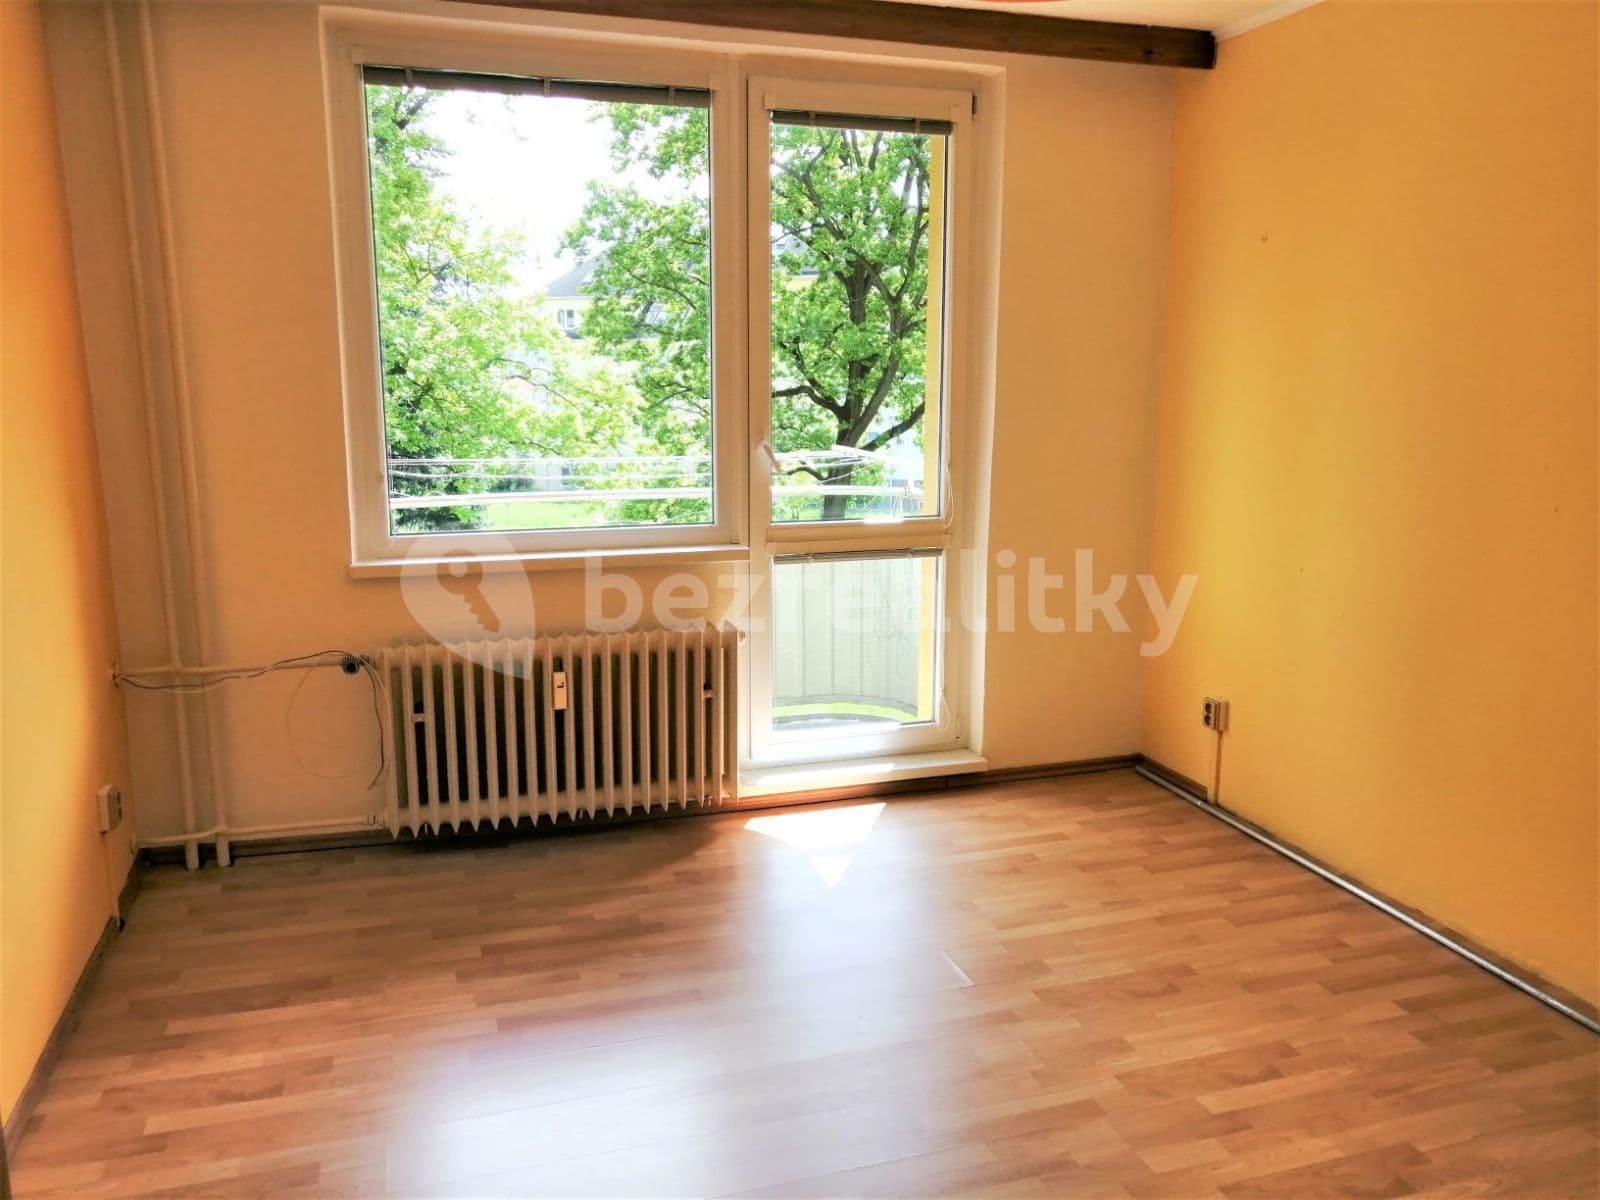 2 bedroom flat to rent, 56 m², Nerudova, Zábřeh, Olomoucký Region